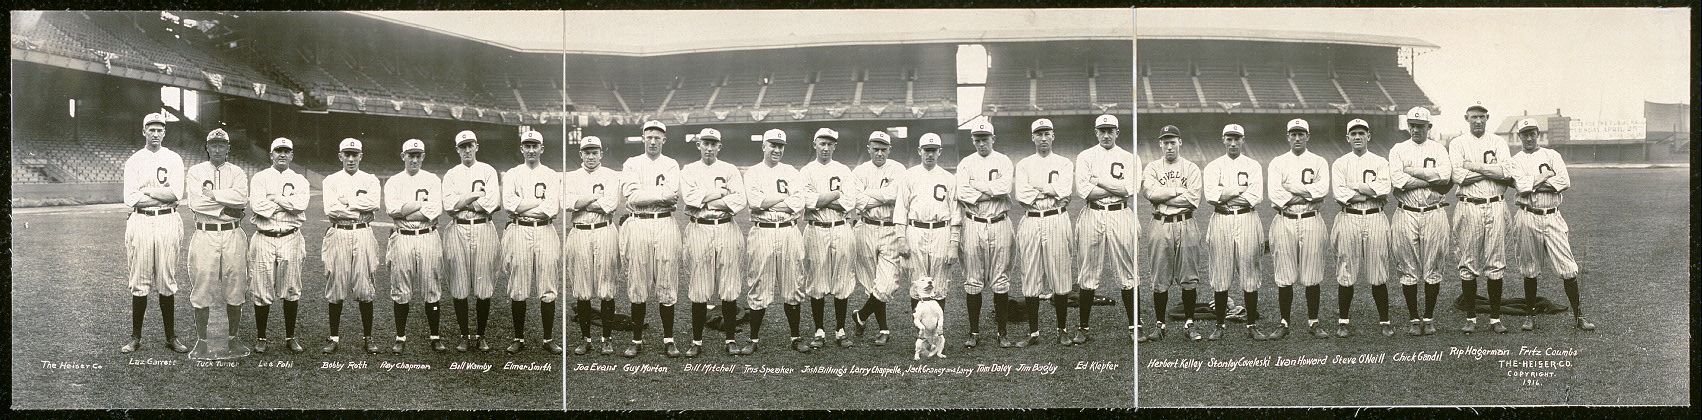 Cleveland baseball team, 1916.jpg